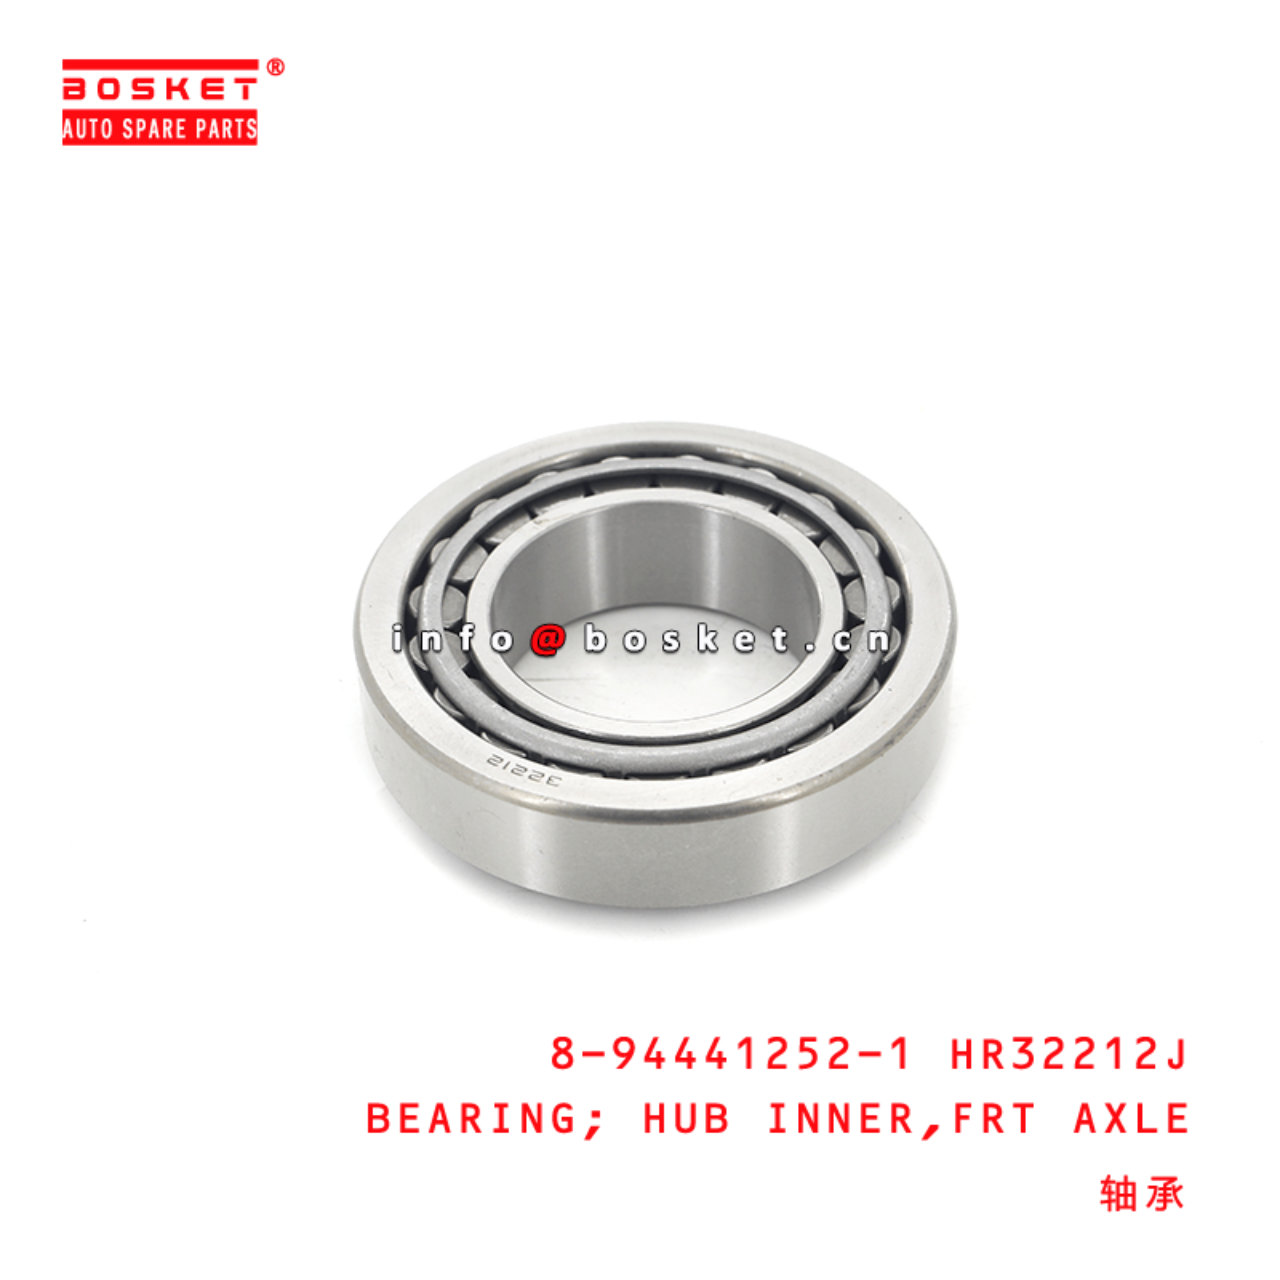 8-94441252-1 8944412521 HR32212J Front Axle Hub Inner Bearing Suitable for ISUZU NPS